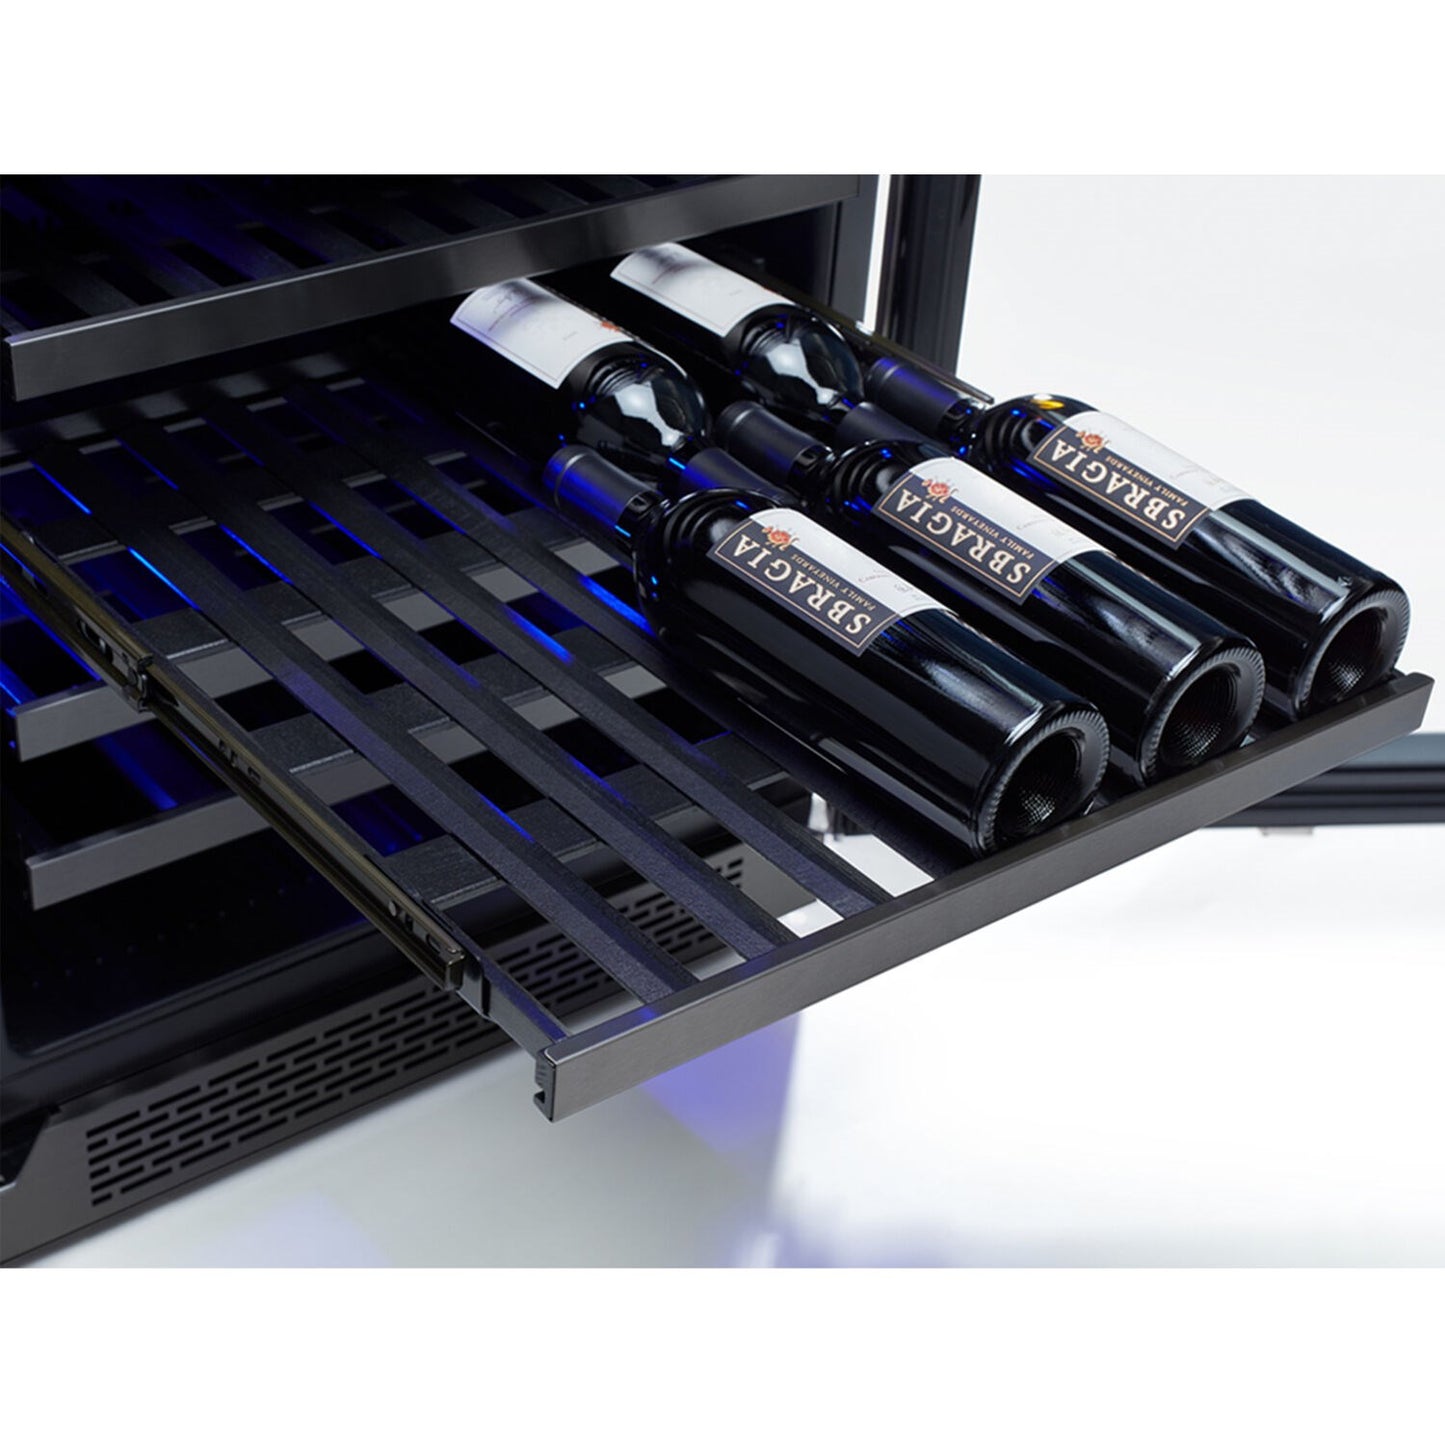 Zephyr Presrv 24" Dual Zone Wine Cooler | Holds 45 Bottles | PRW24C02CG